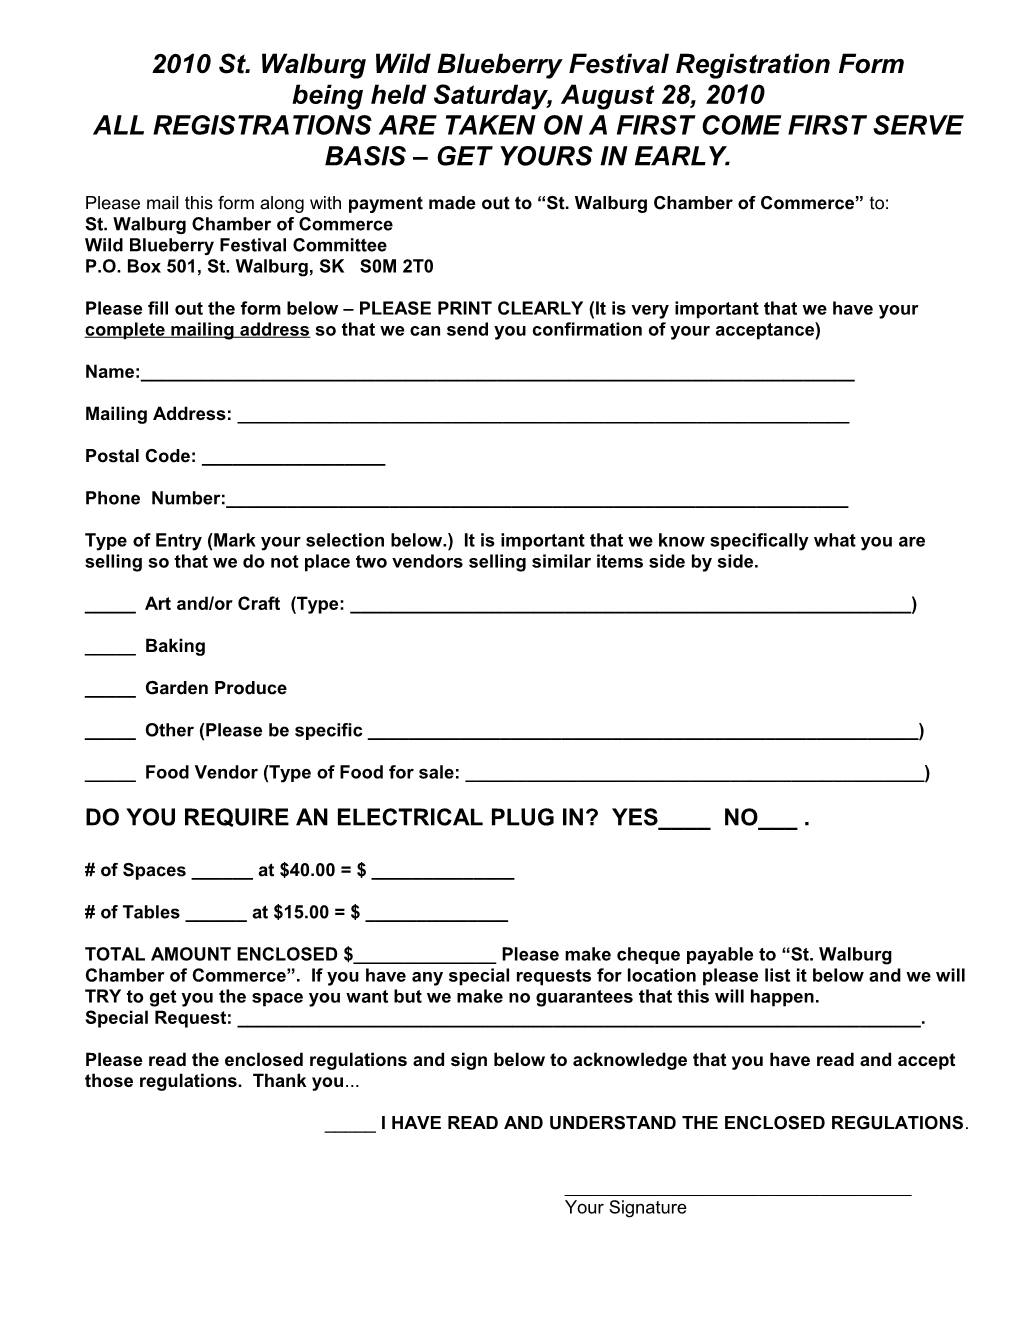 2010St. Walburg Wild Blueberry Festival Registration Form